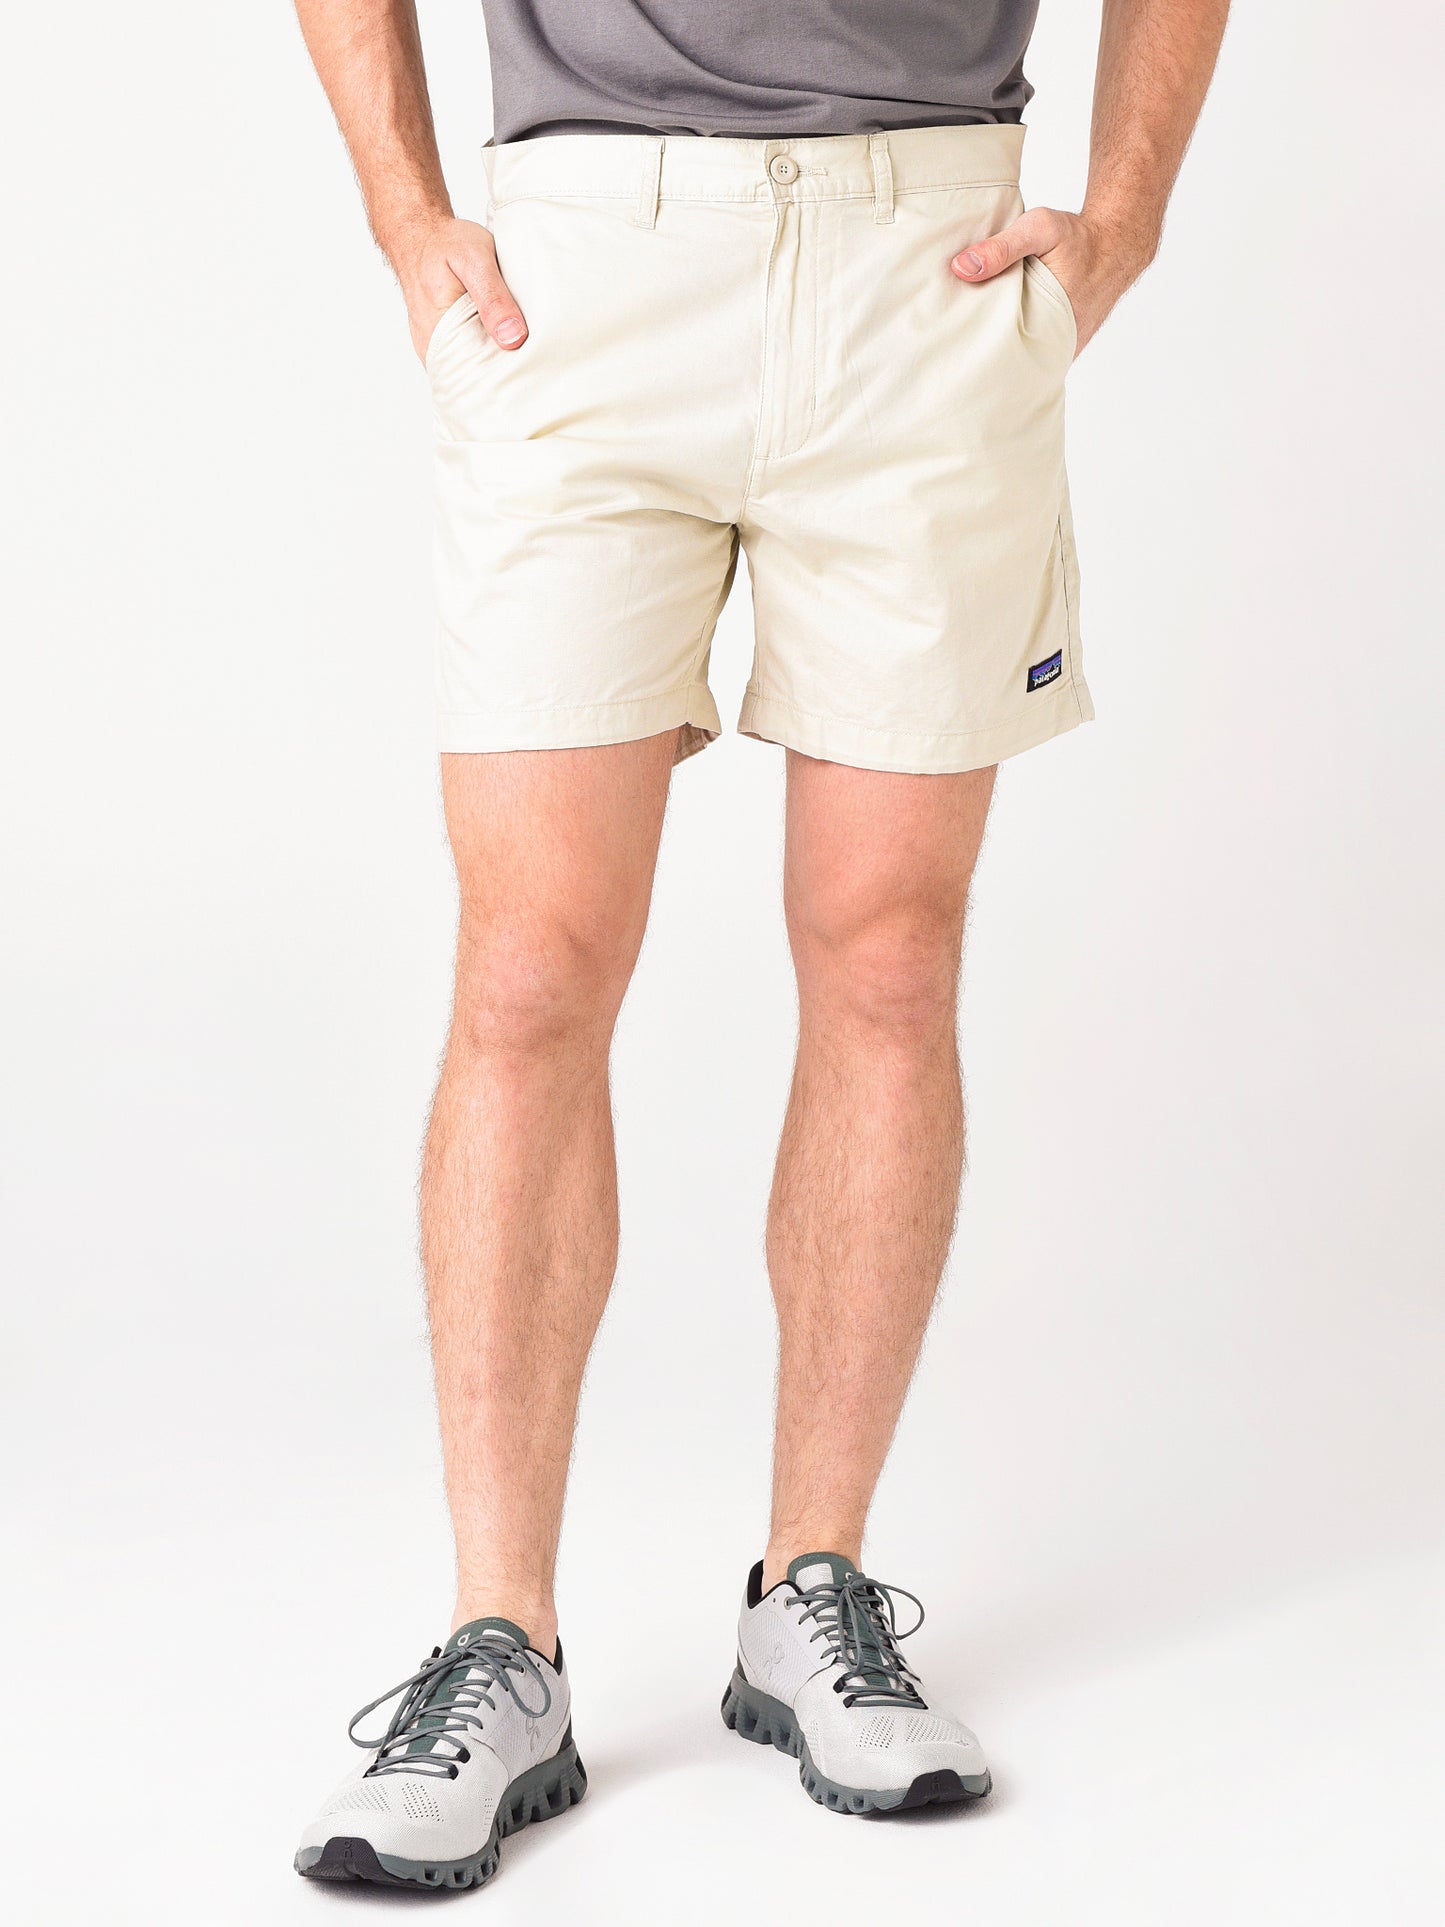 Patagonia Men's Lightweight All-Wear Hemp Shorts - 8 Inseam